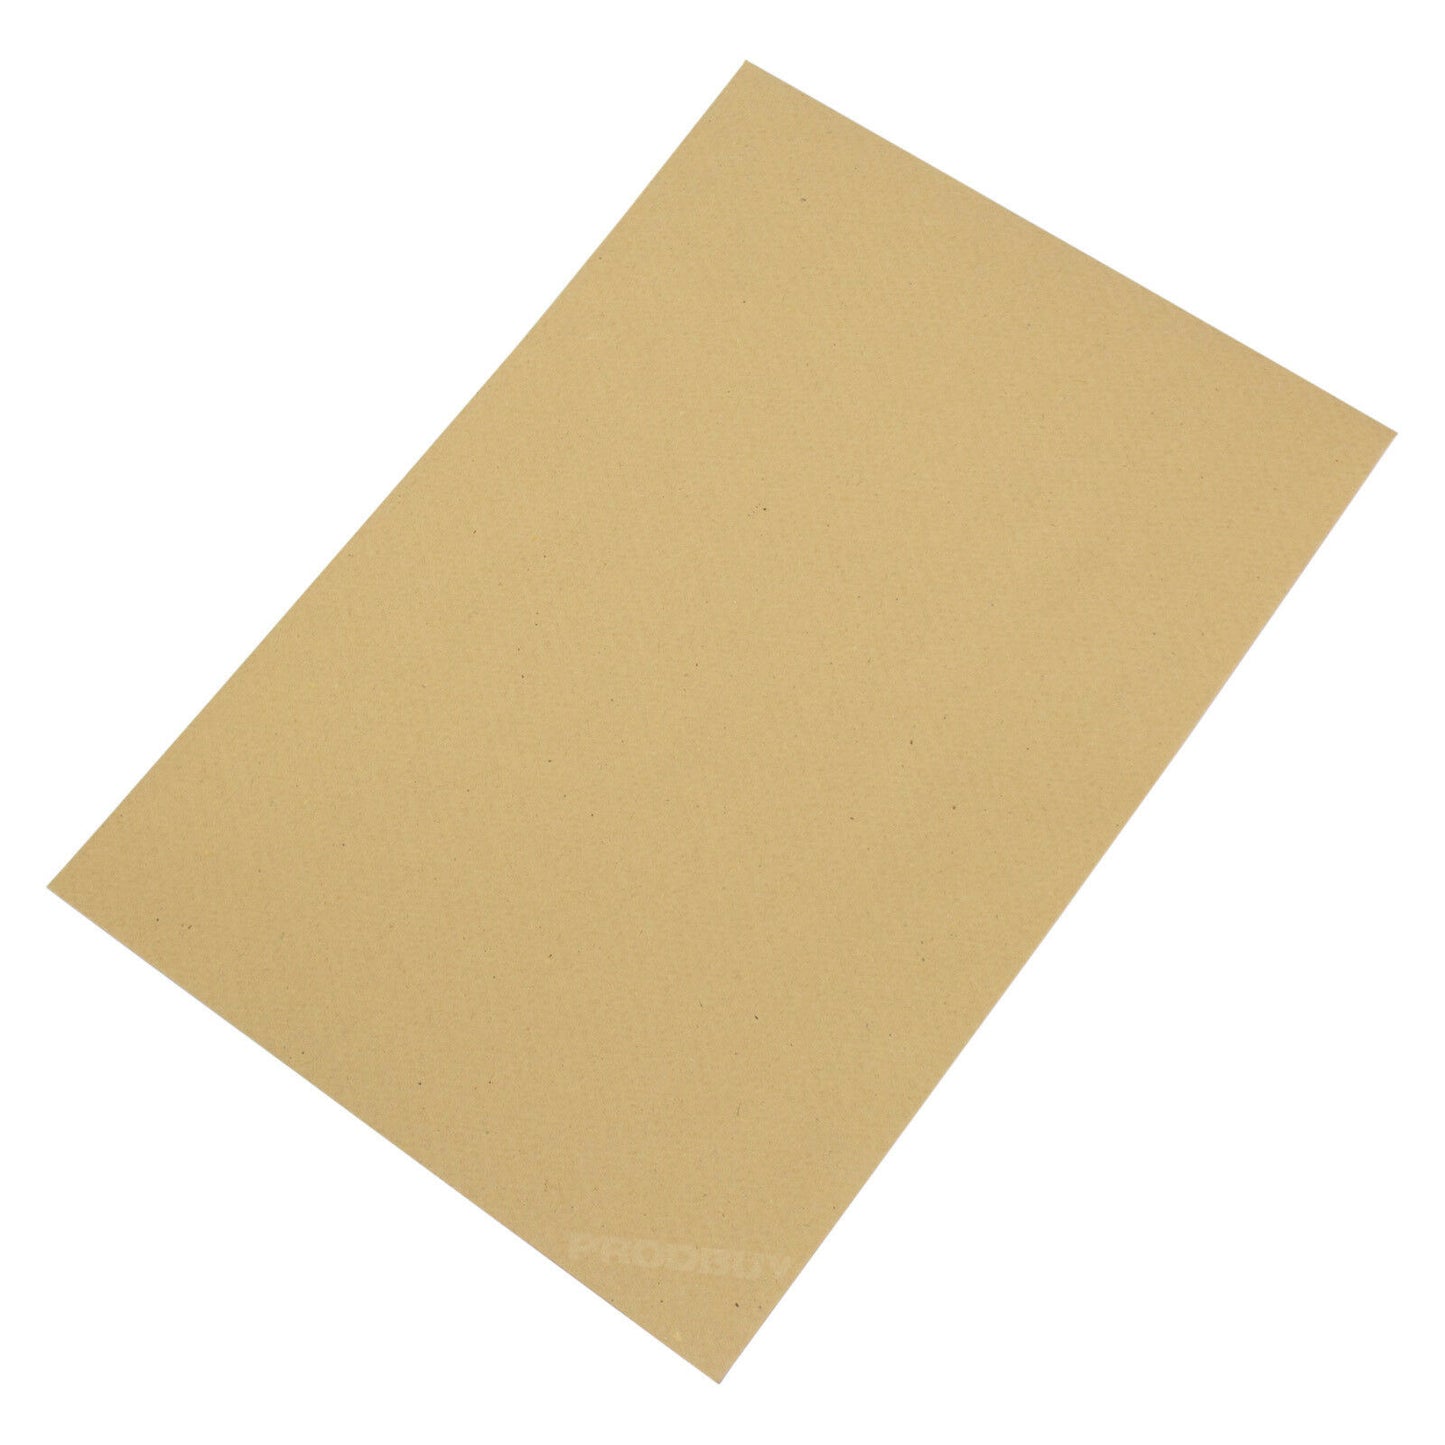 25 C4 Envelopes Manilla Plain 115gsm Self Seal